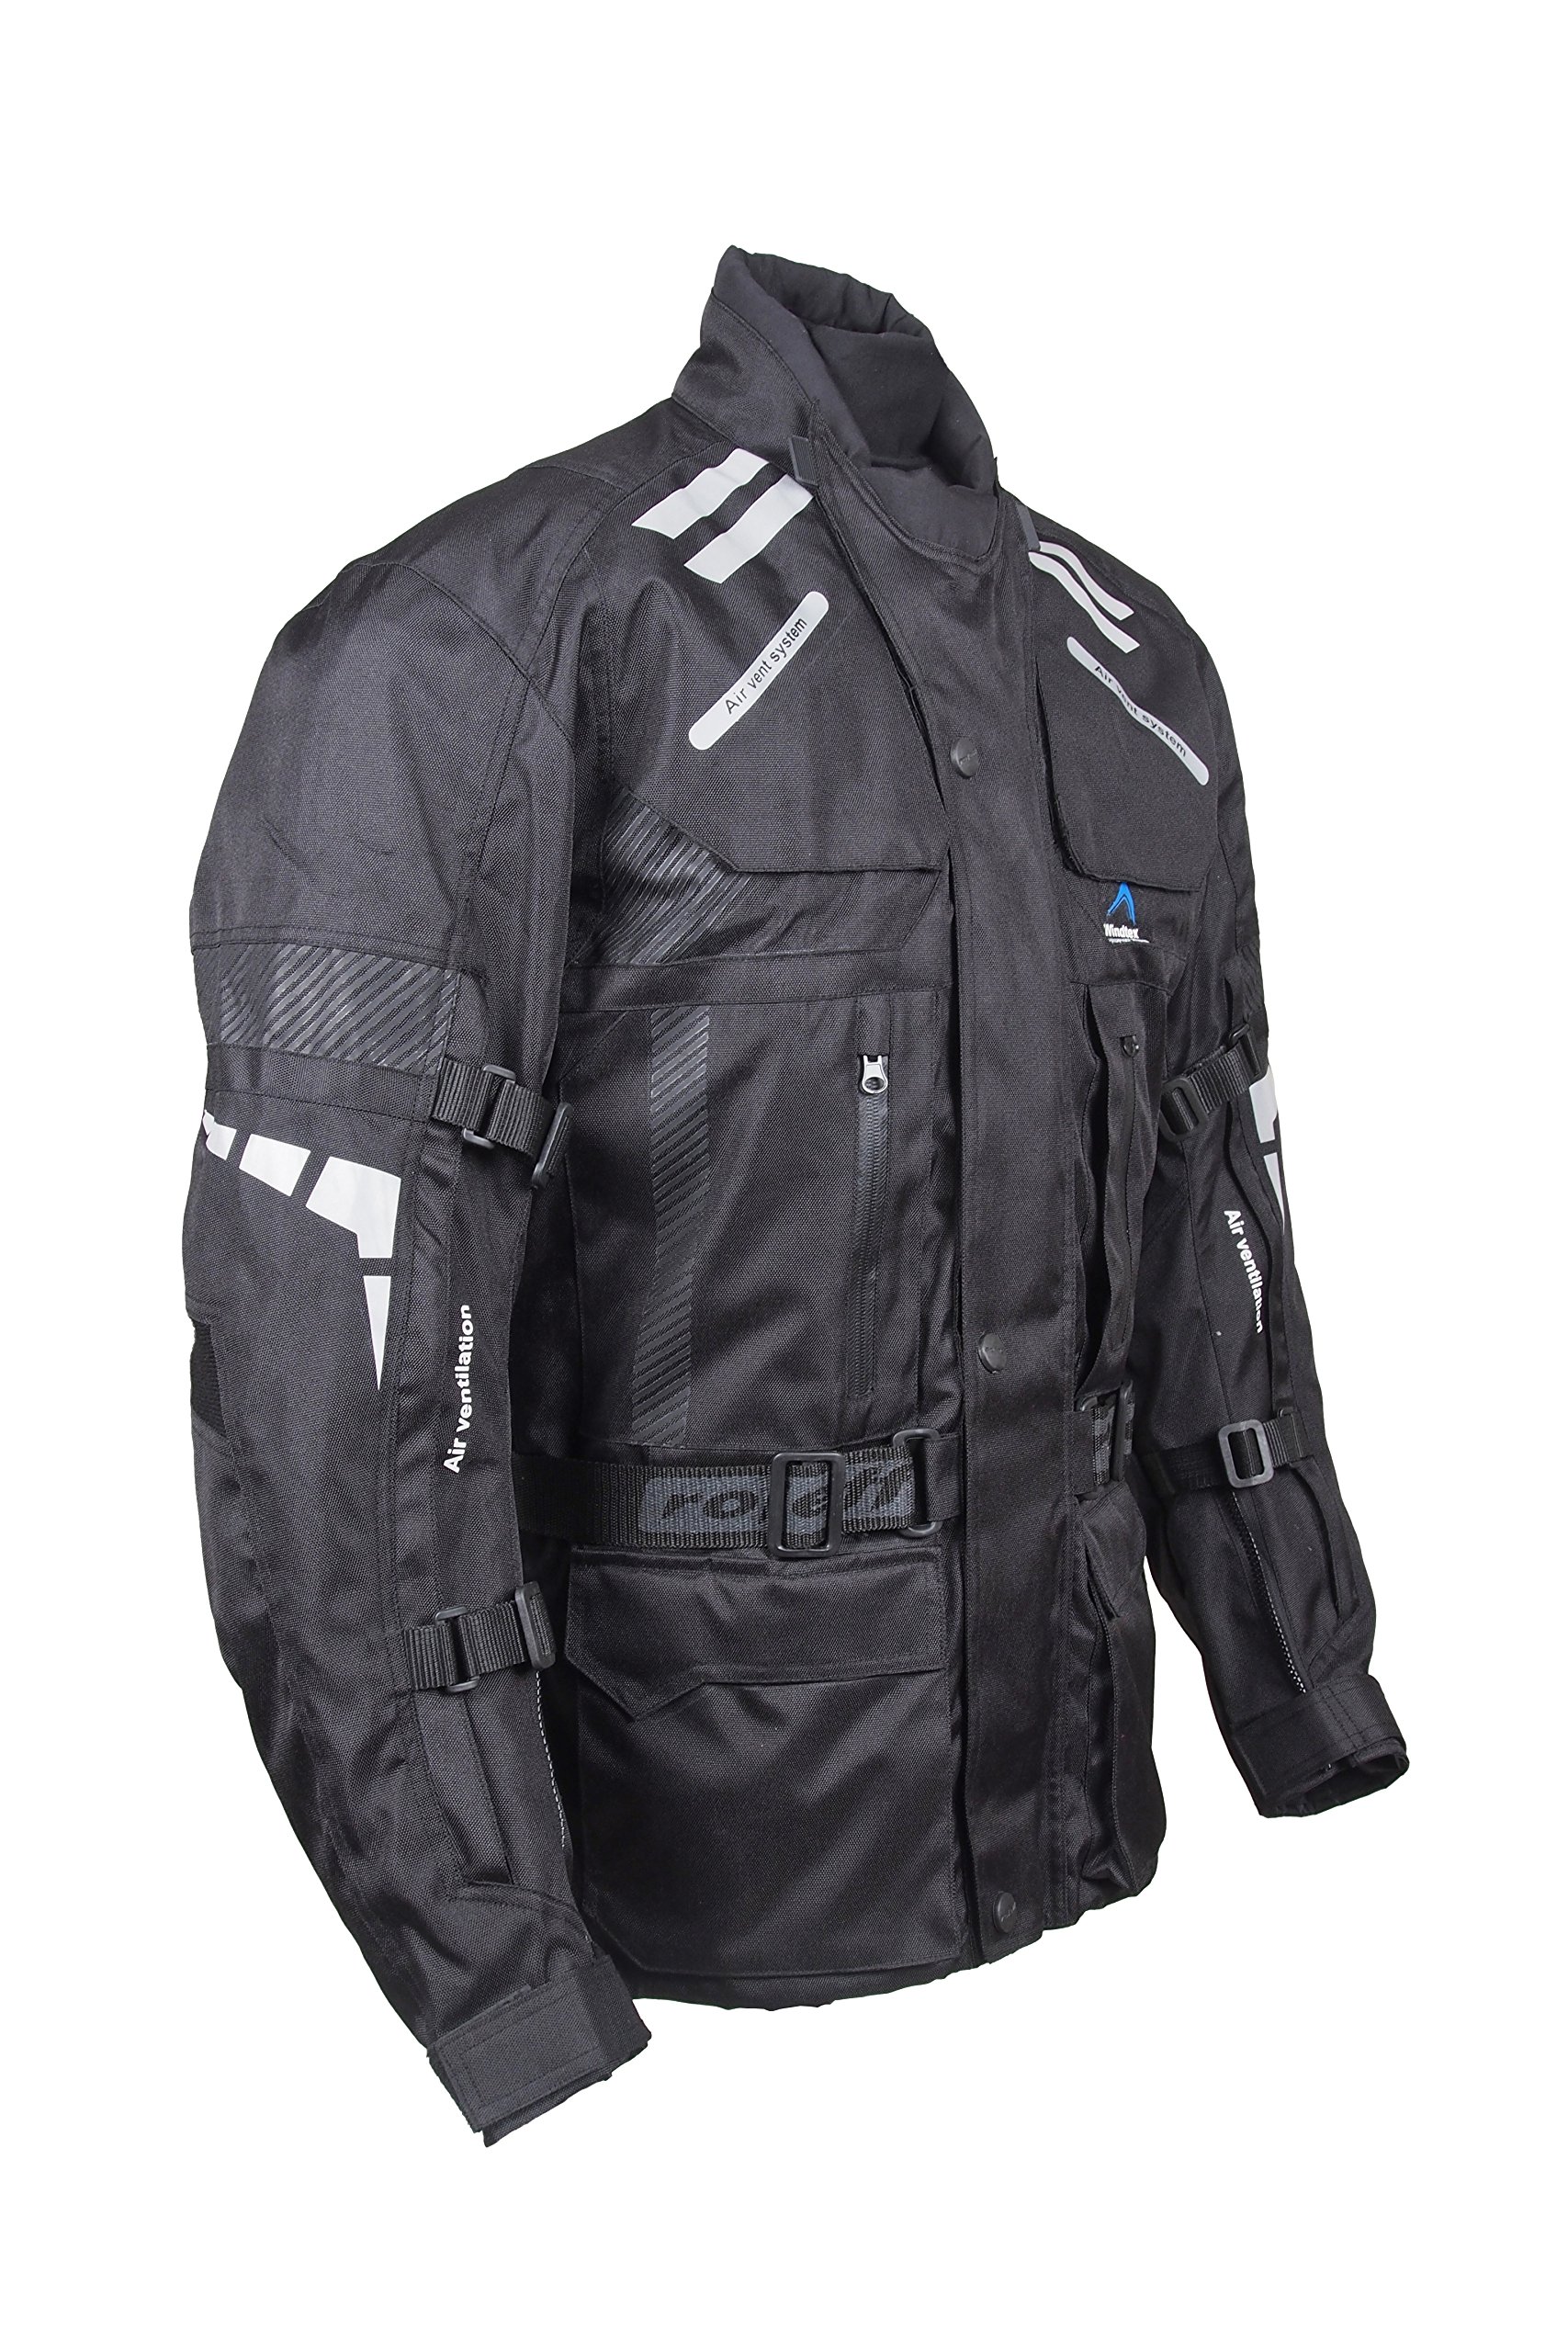 Roleff Racewear Unisex 7742 Textiljacke Motorradjacke mit Protektoren, Schwarz, S EU von ROLEFF RACEWEAR